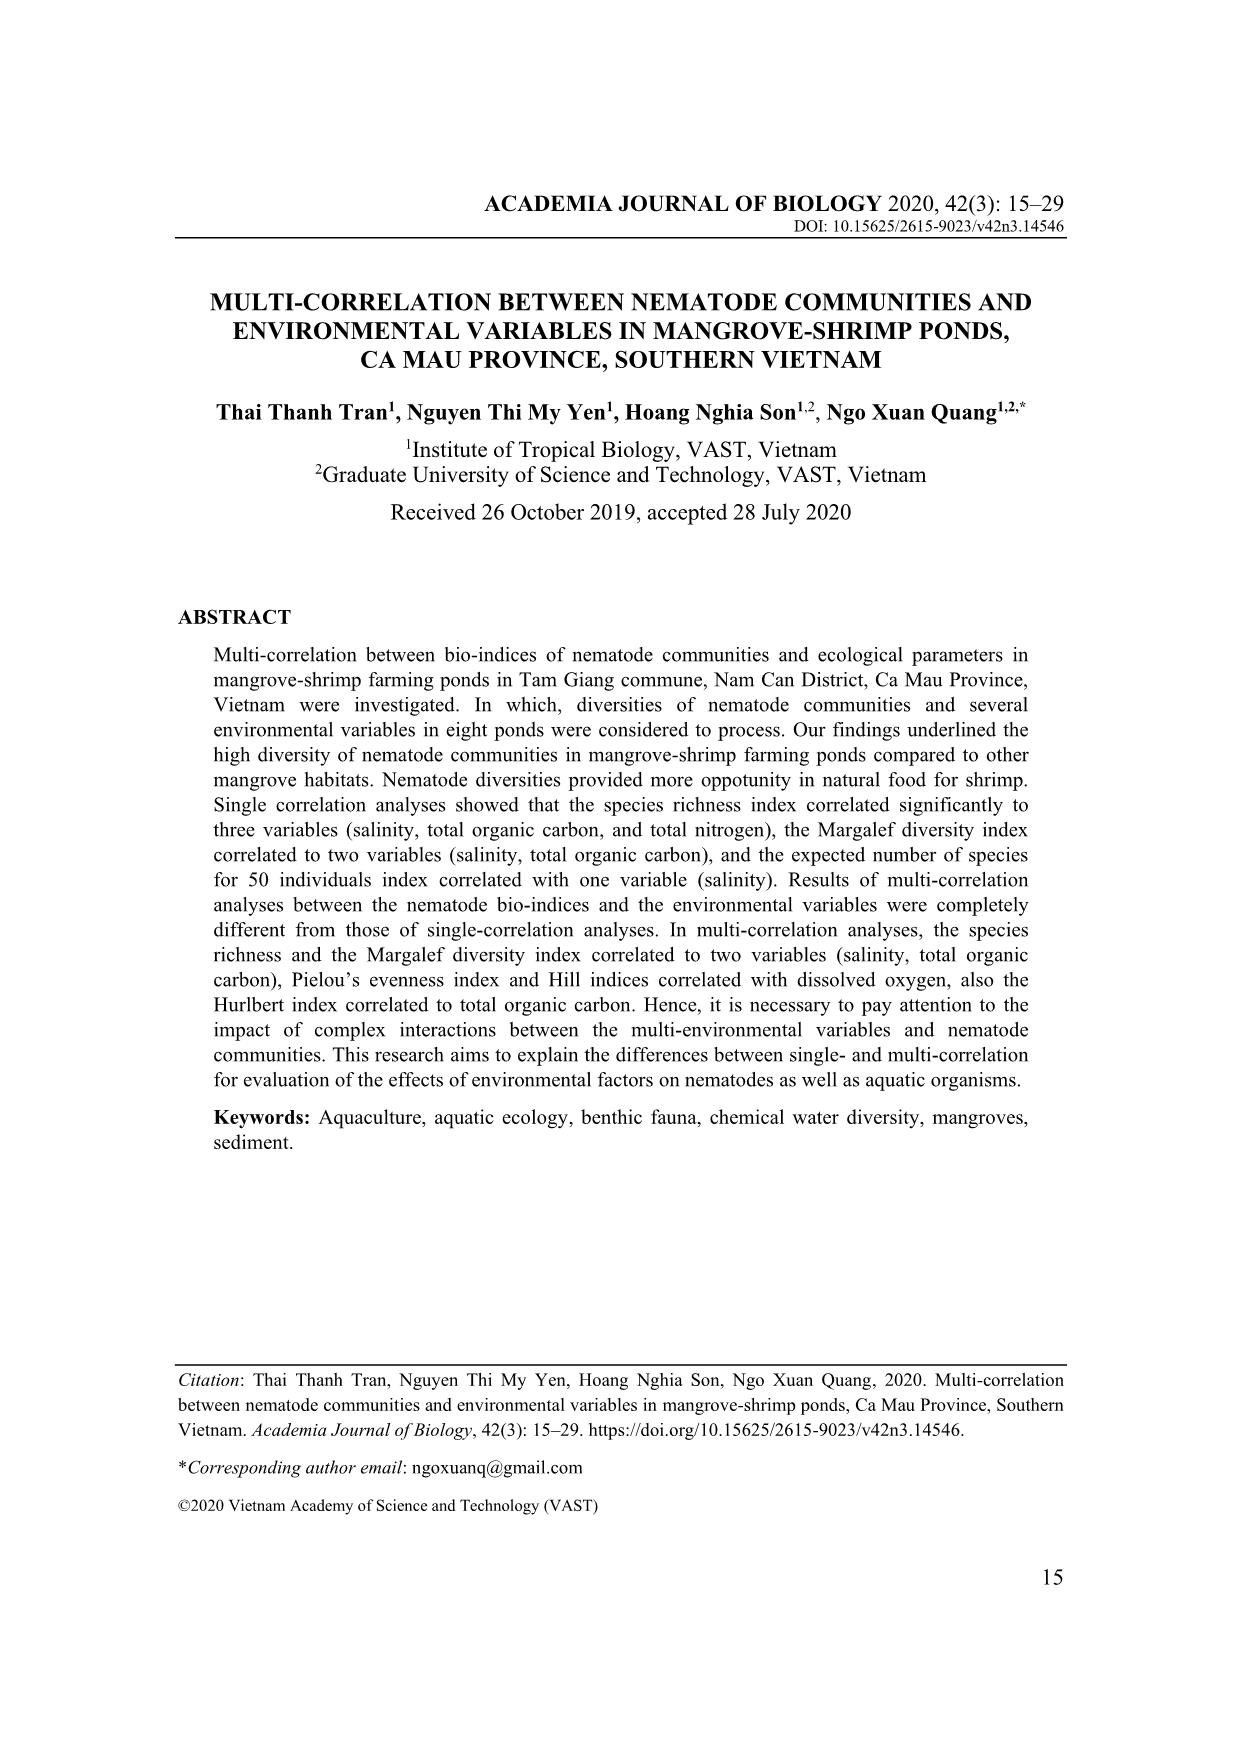 Multi-correlation between nematode communities and environmental variables in mangrove-shrimp ponds, Ca Mau province, Southern Vietnam trang 1